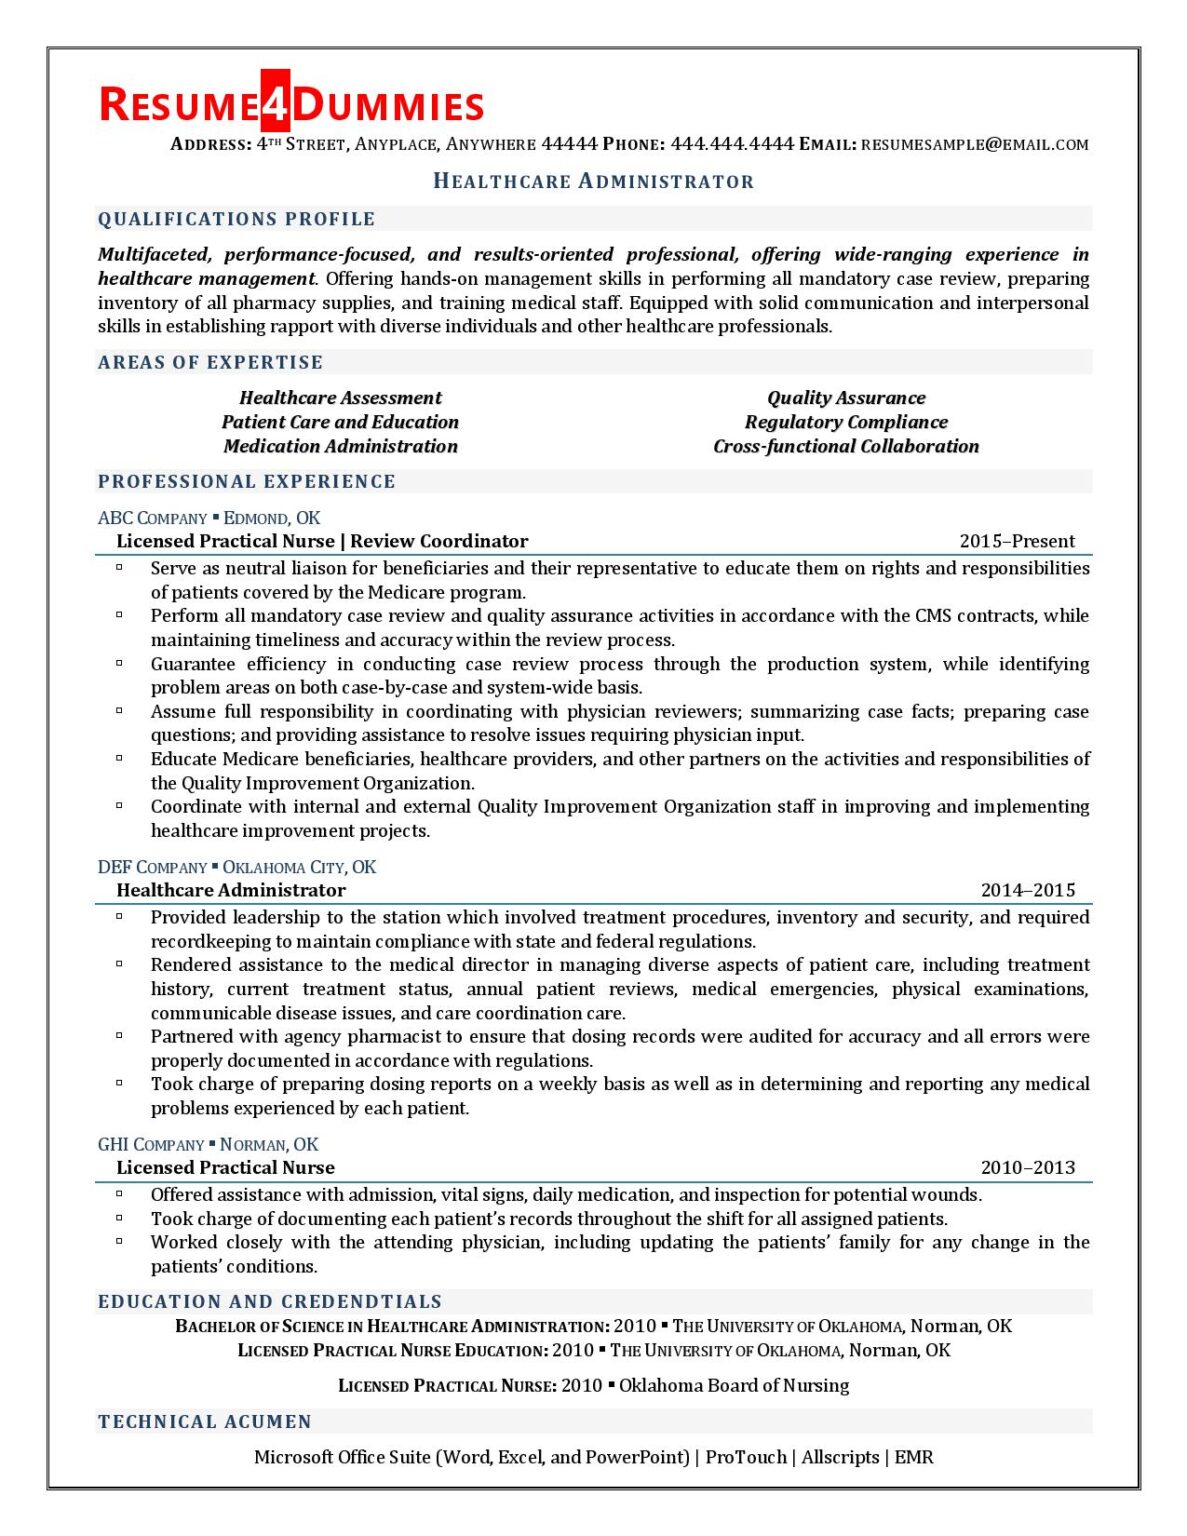 Healthcare Administrator Resume Example Resume4Dummies